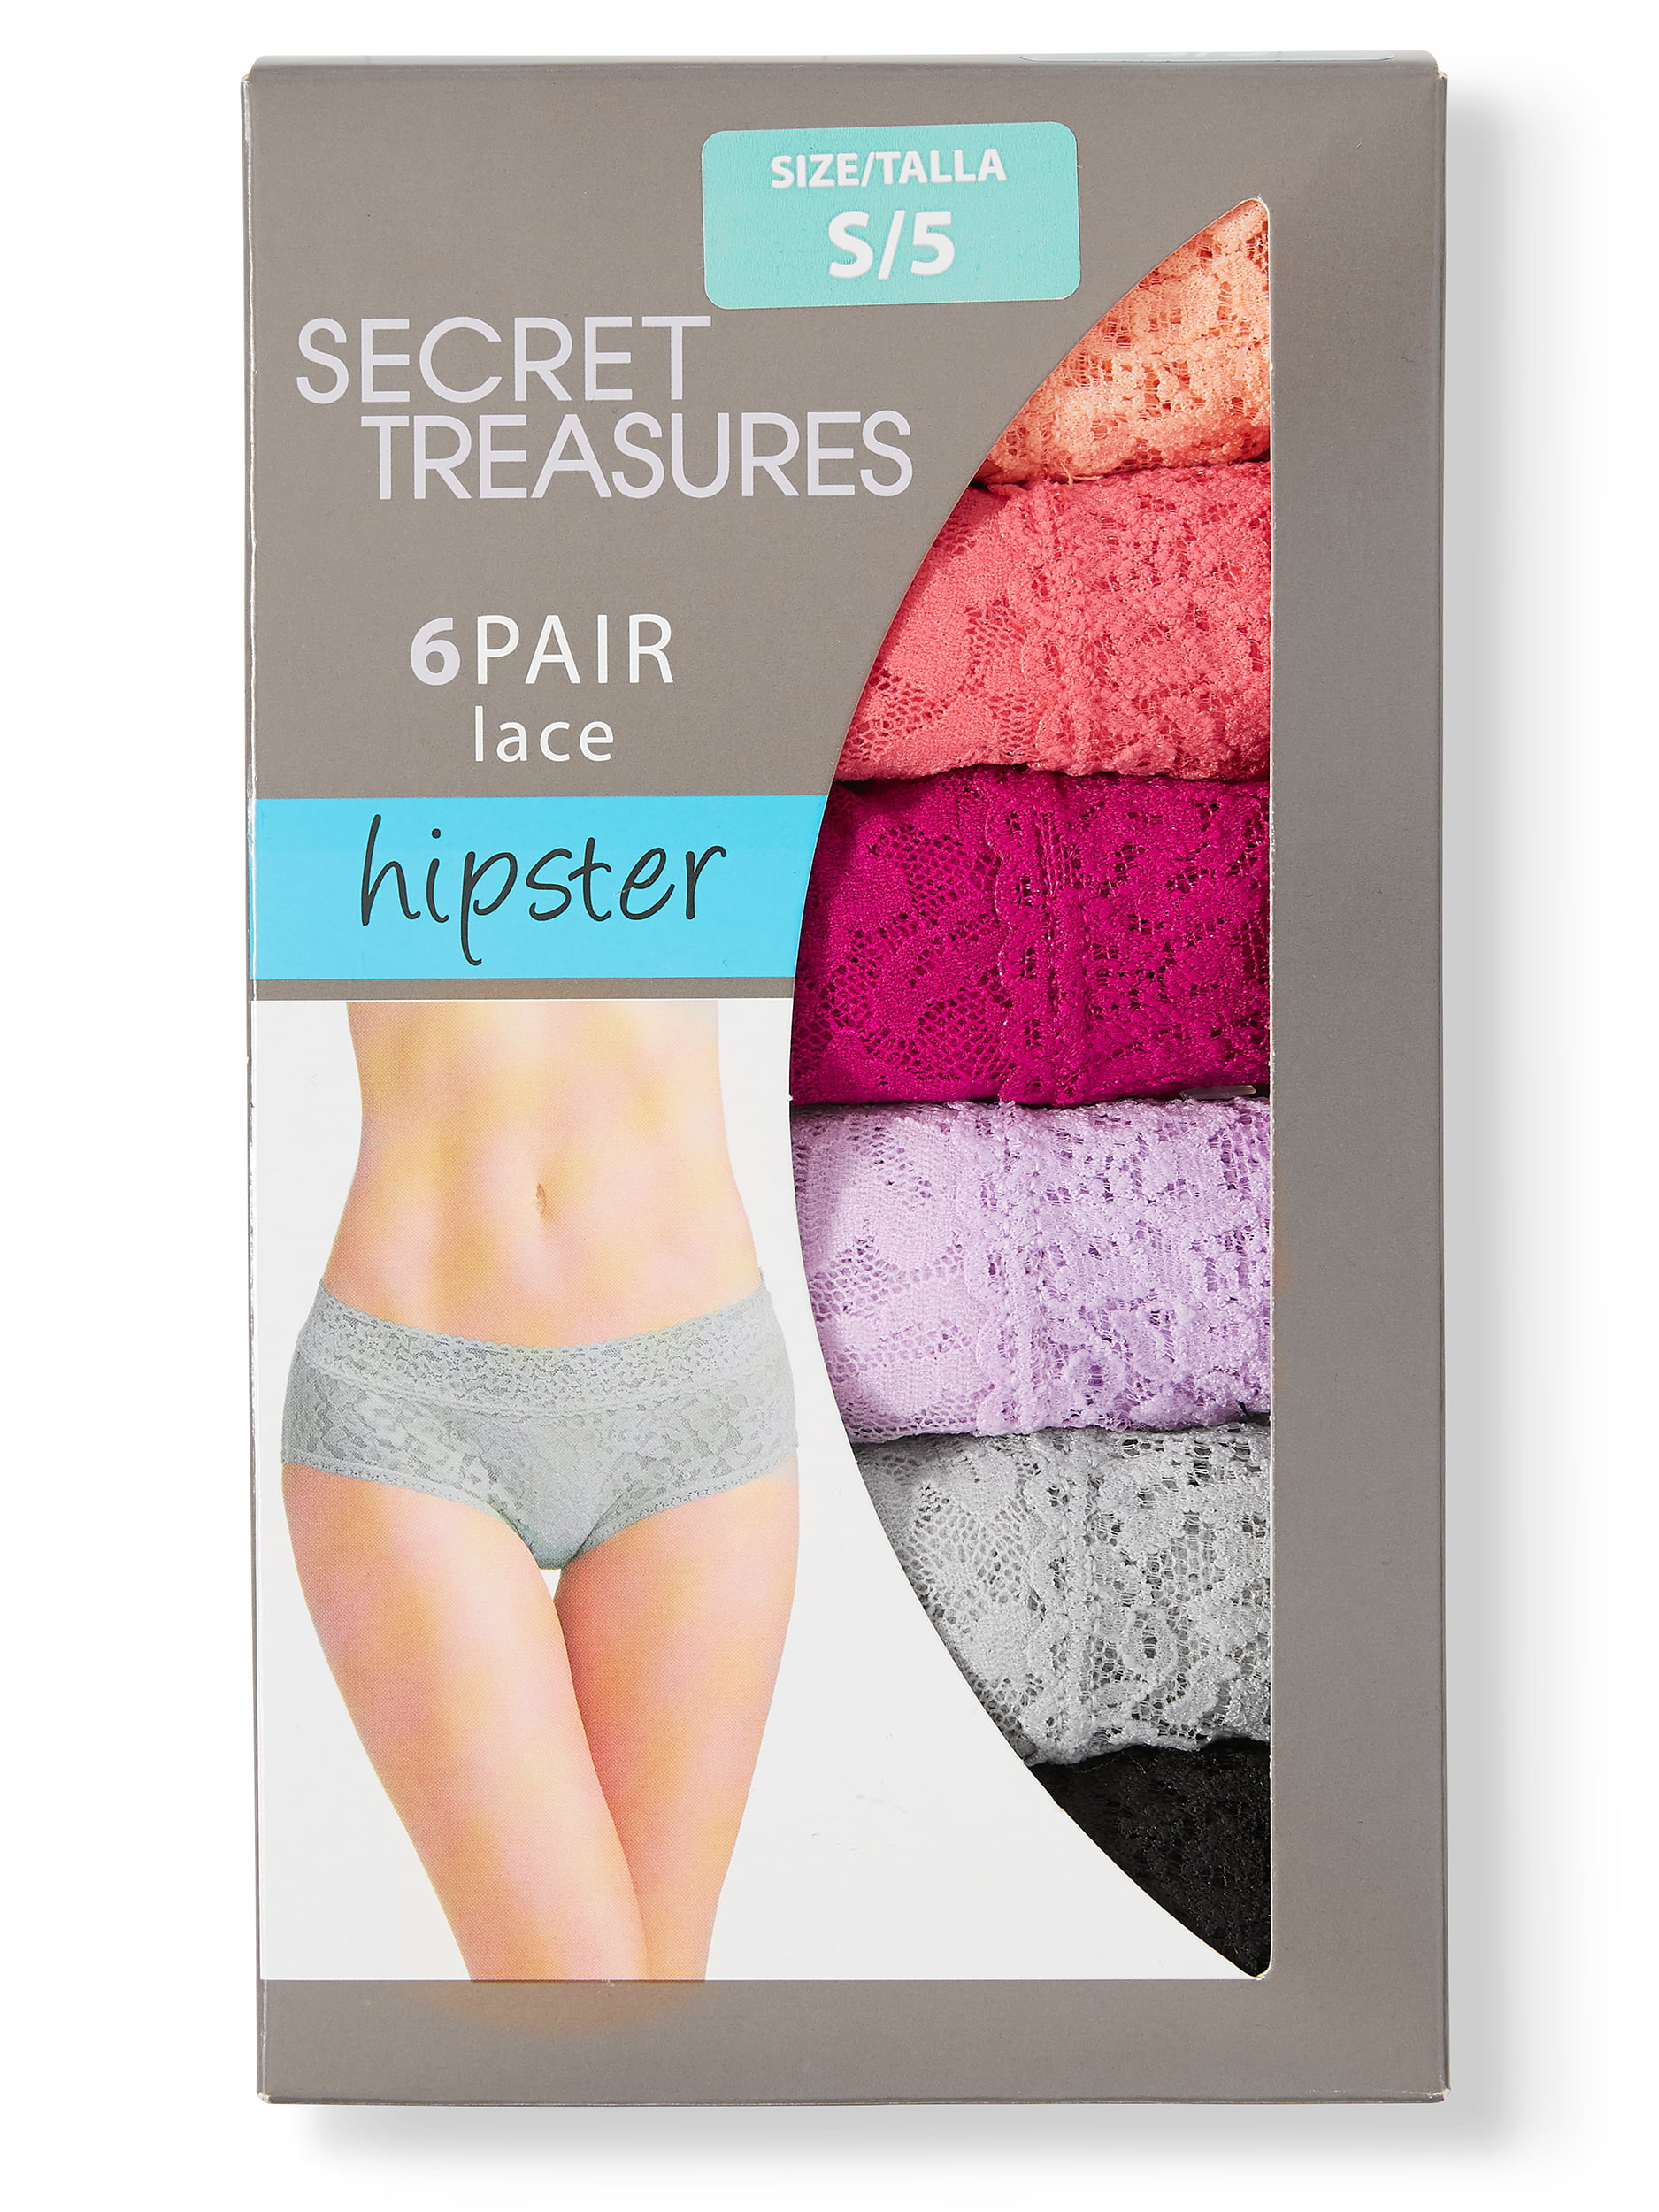 secret treasures intimates underwear.